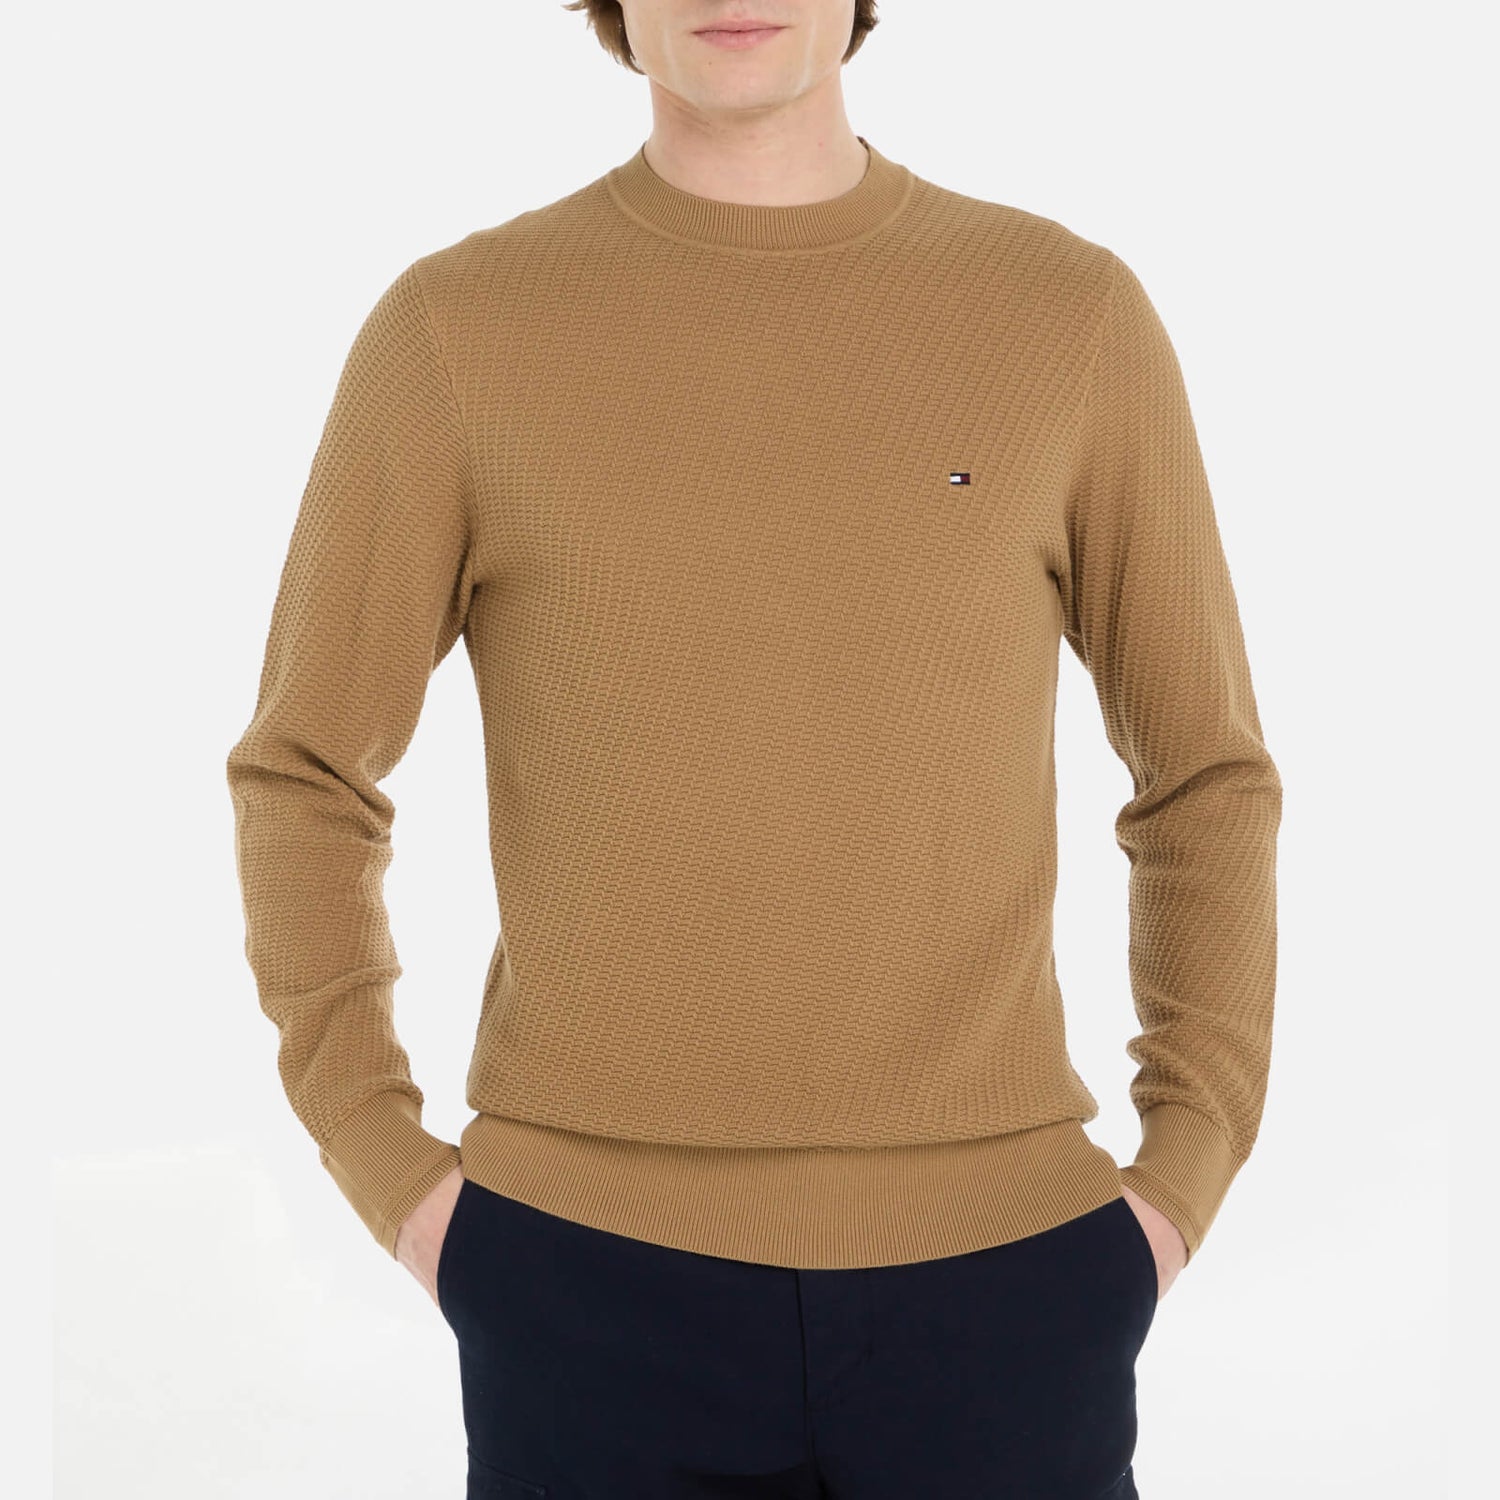 Tommy Hilfiger Rectangular Structure Organic Cotton Sweatshirt - S